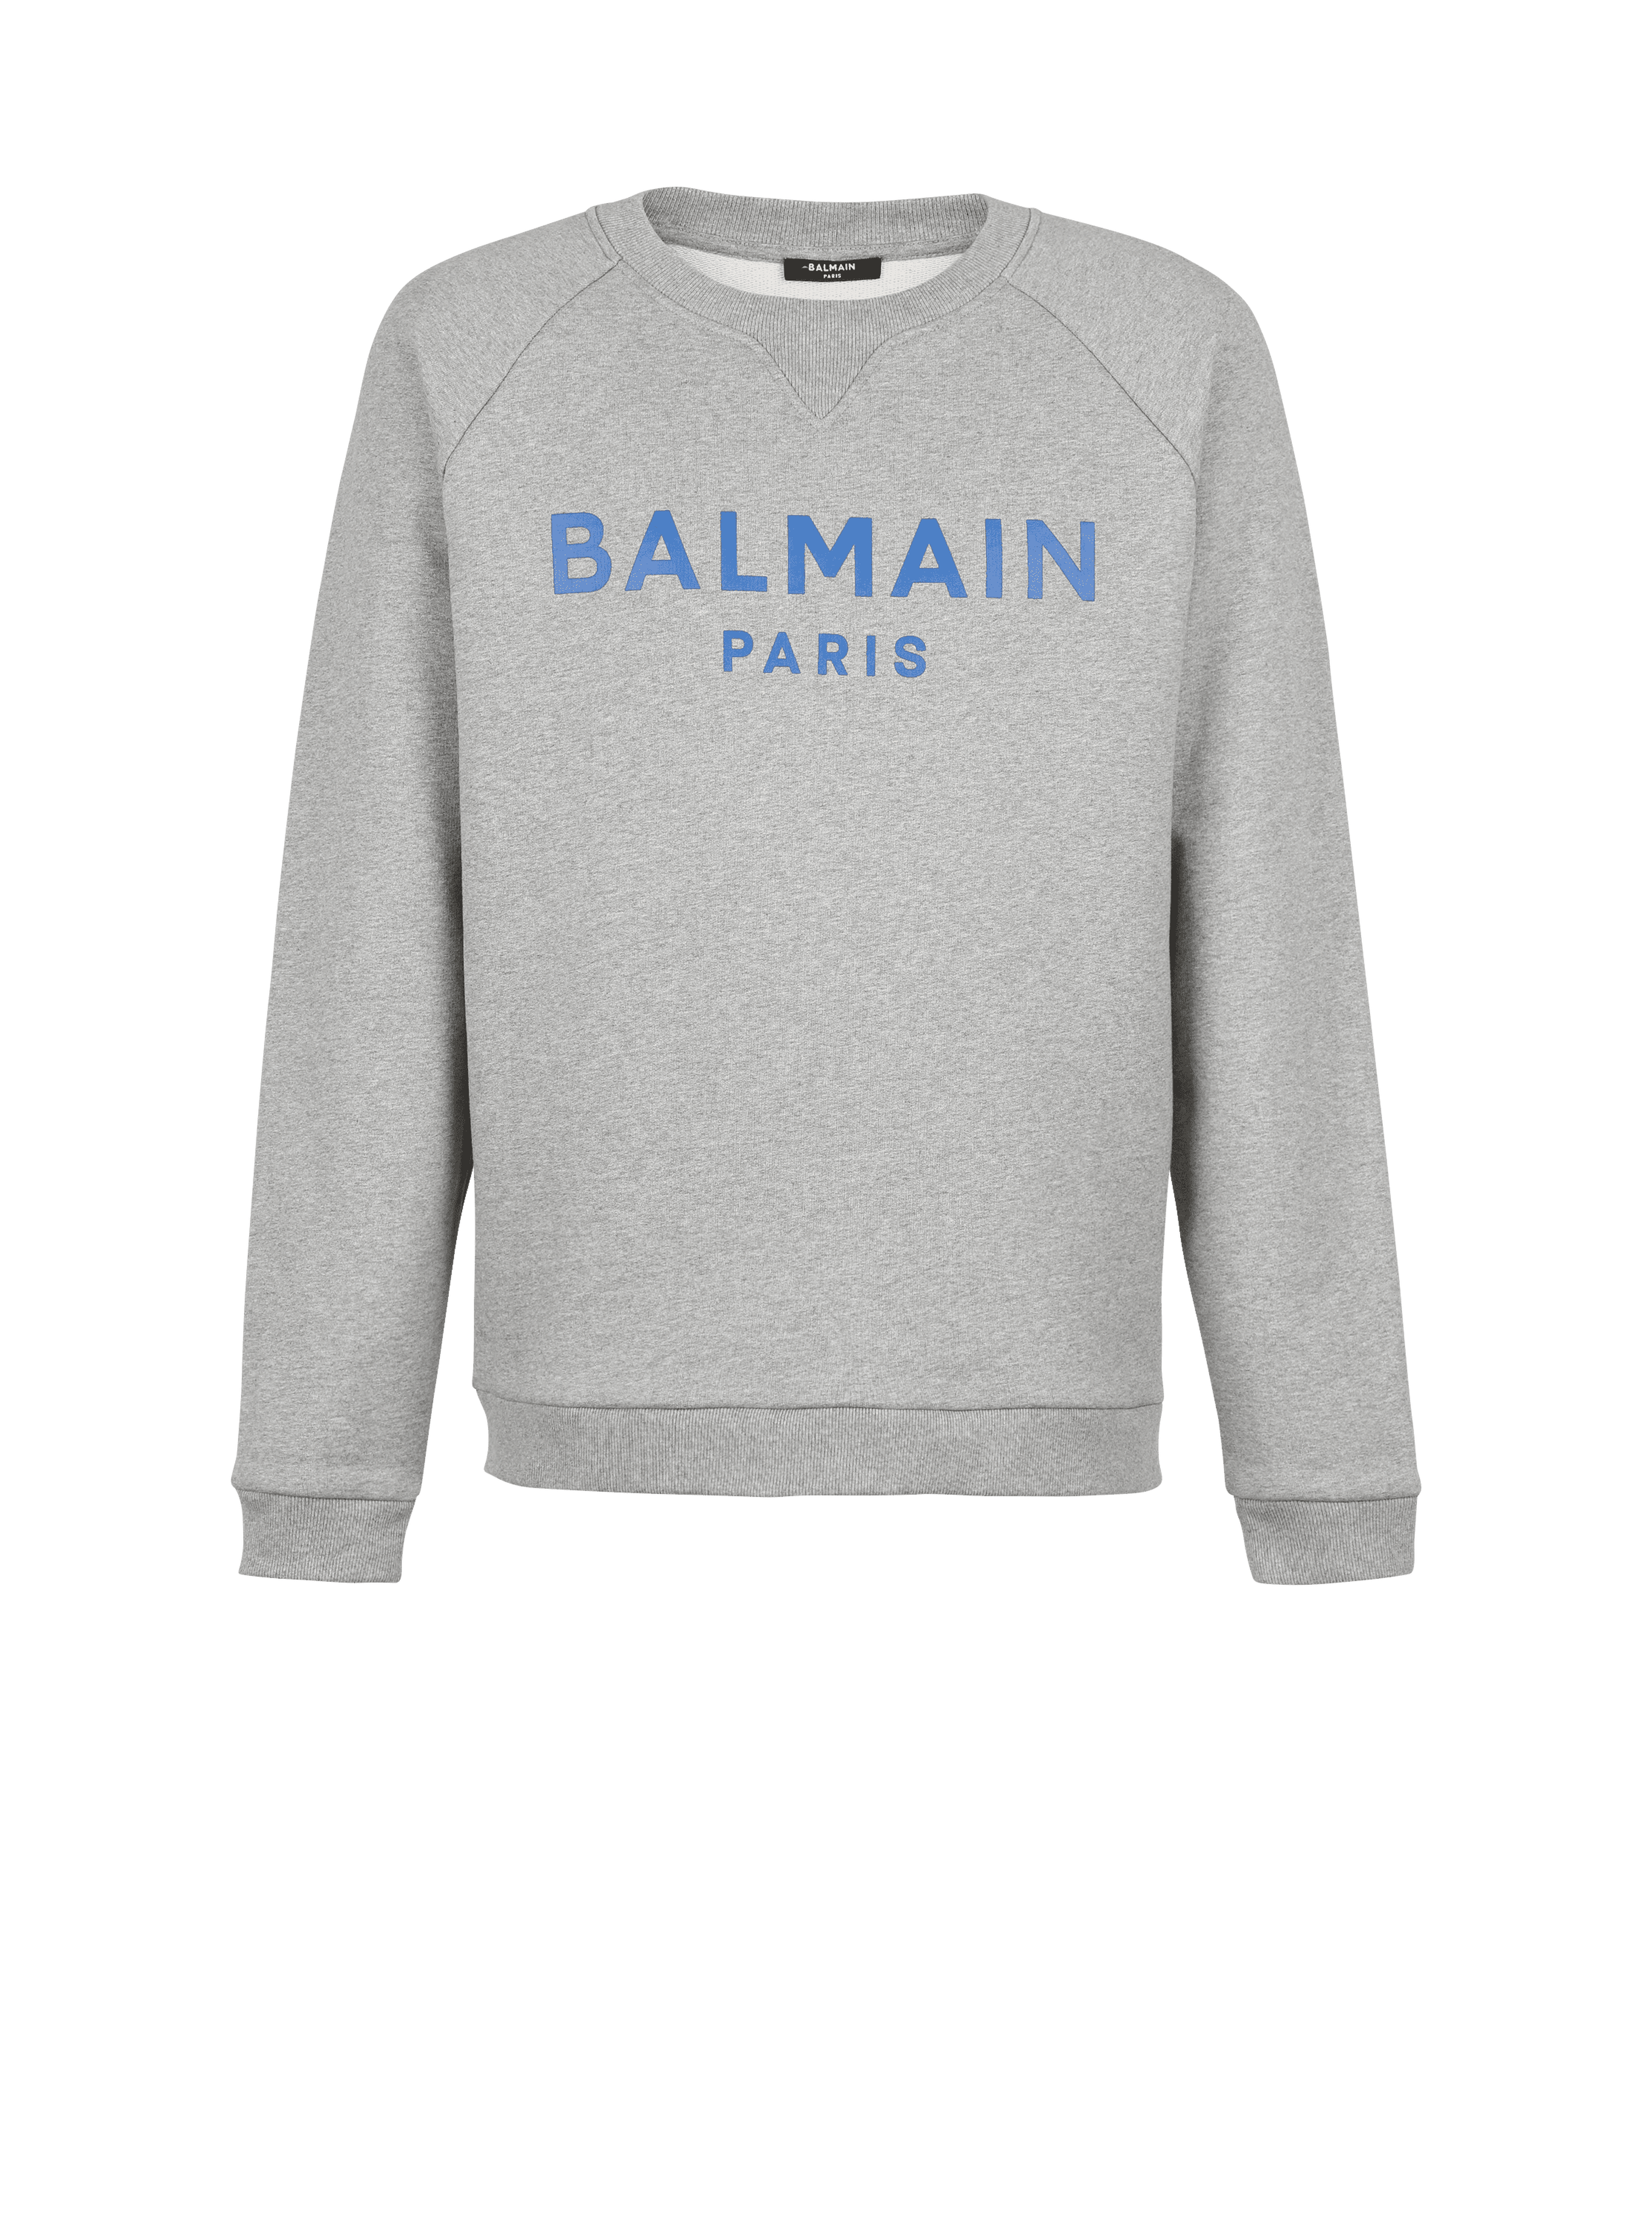 Cotton sweatshirt with Balmain Paris logo print, grey